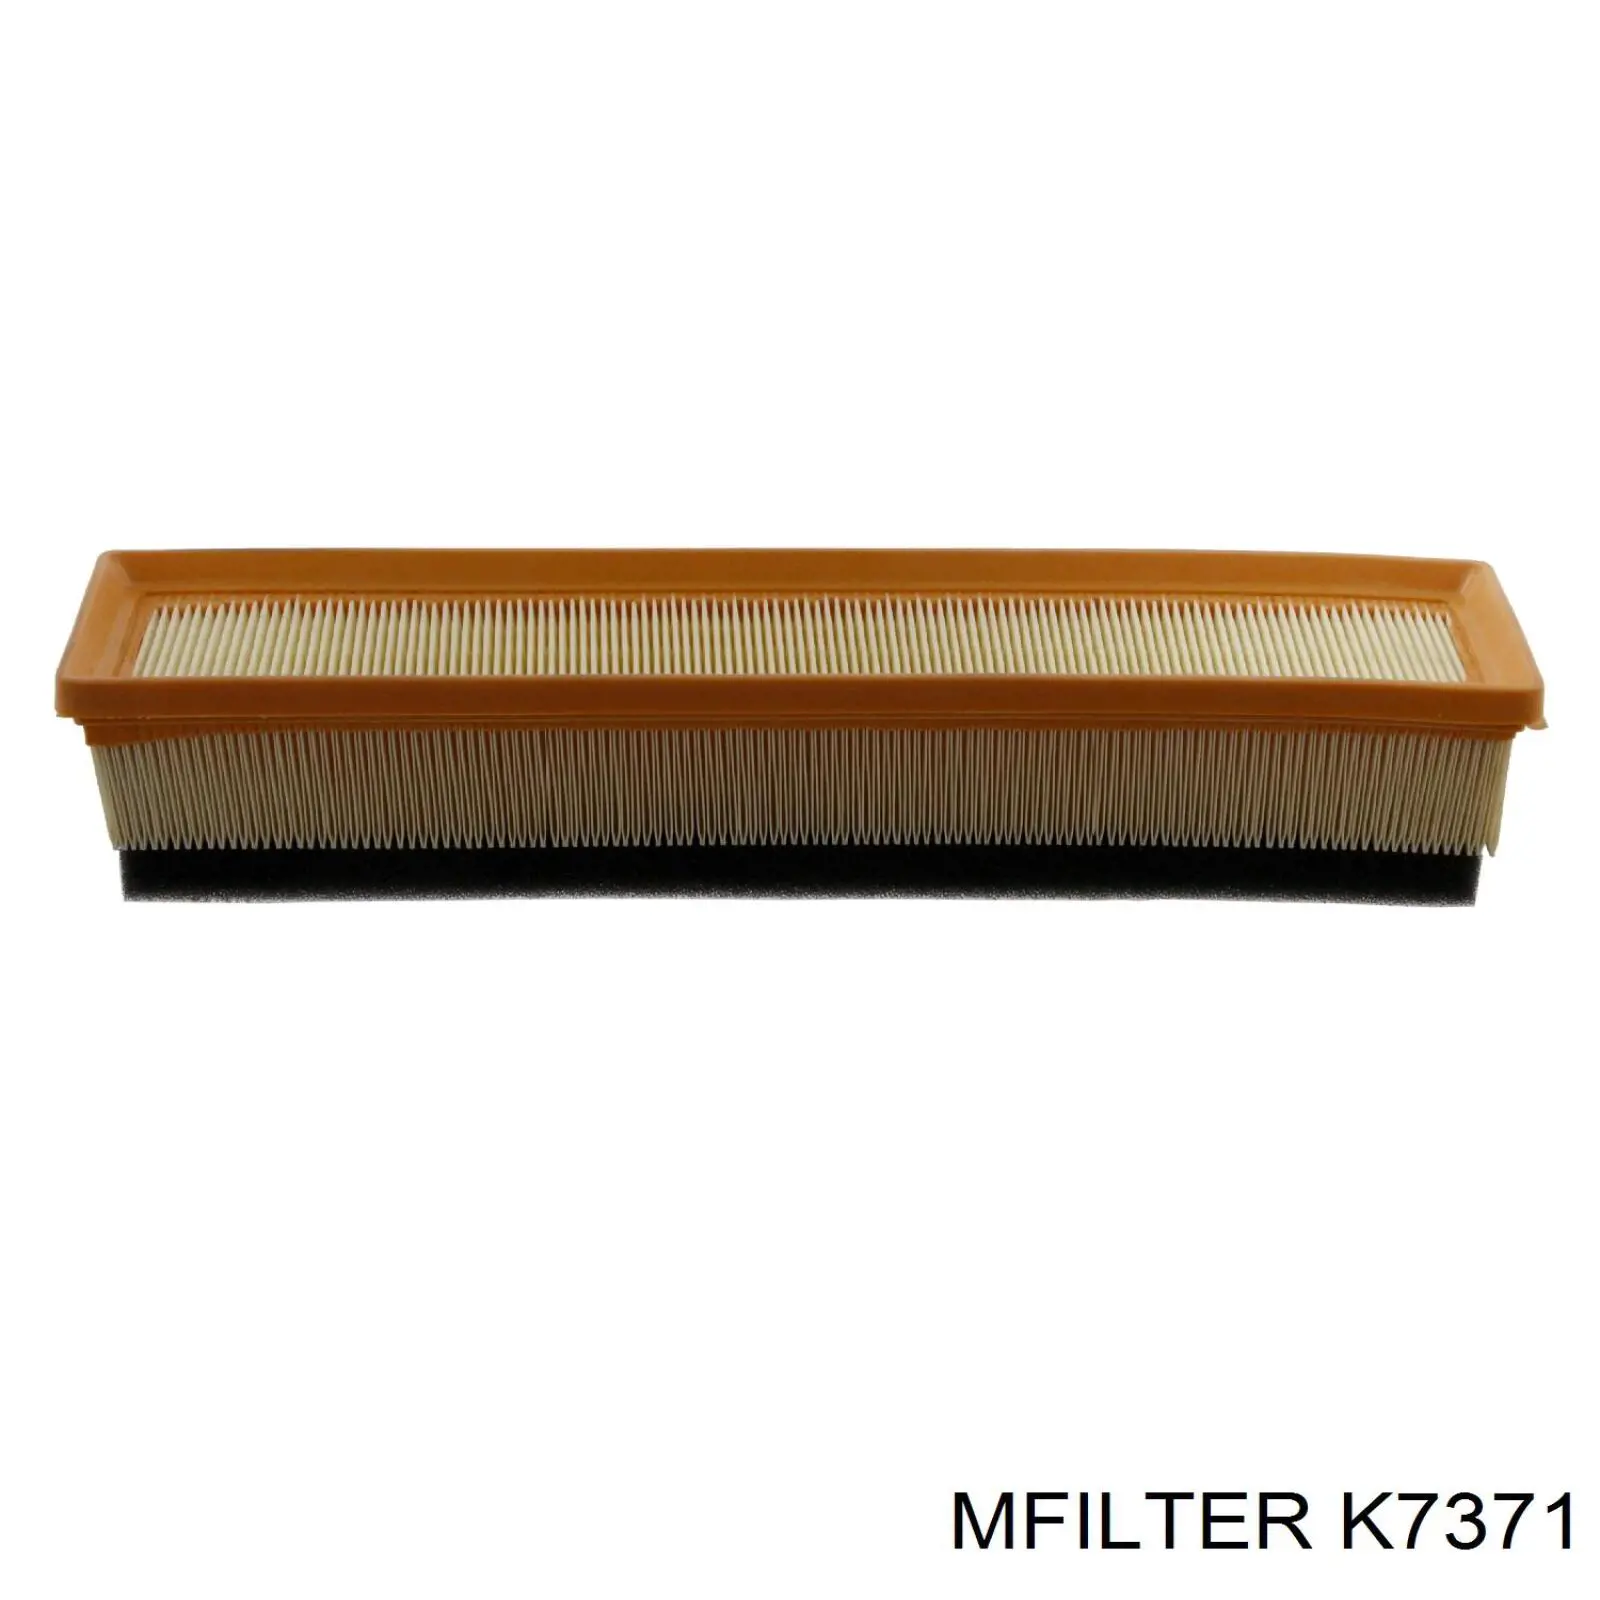 K7371 Mfilter filtro de aire